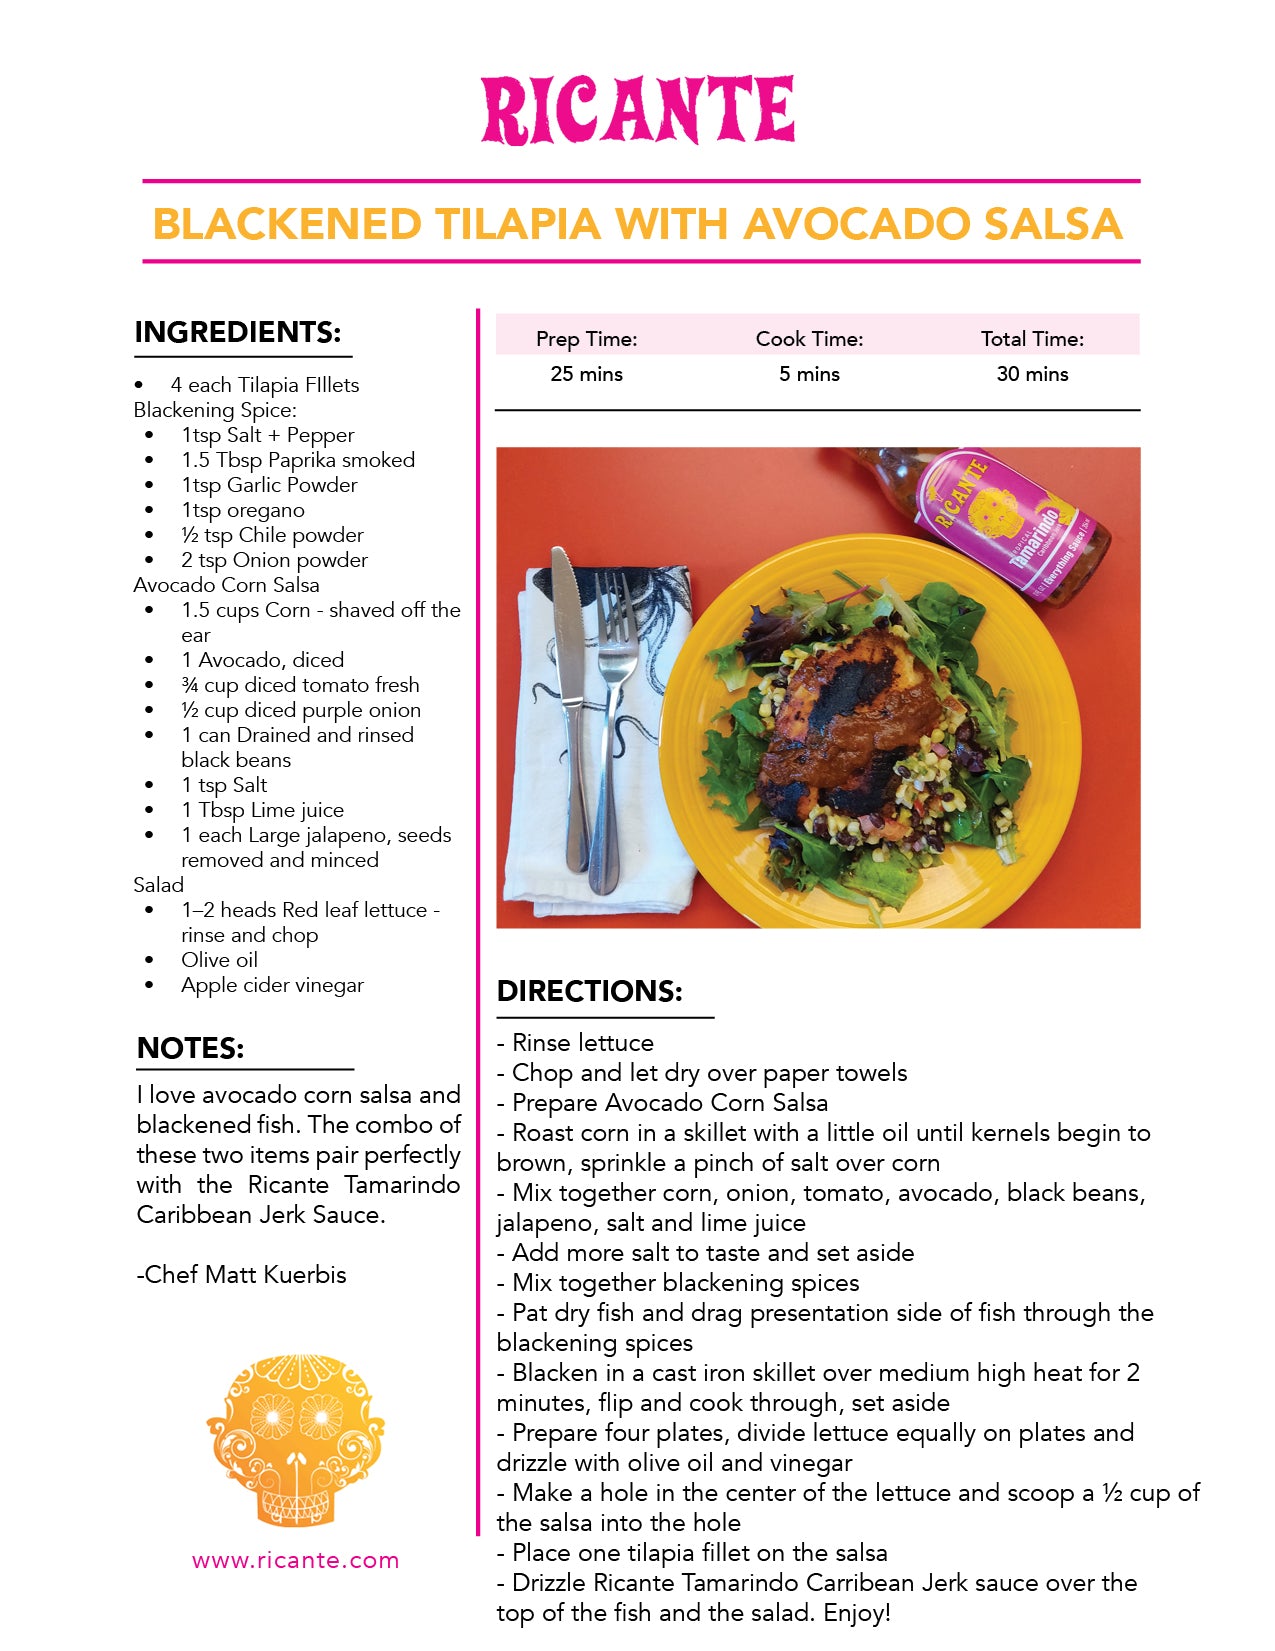 Blackened tilapia with Avocado Salsa